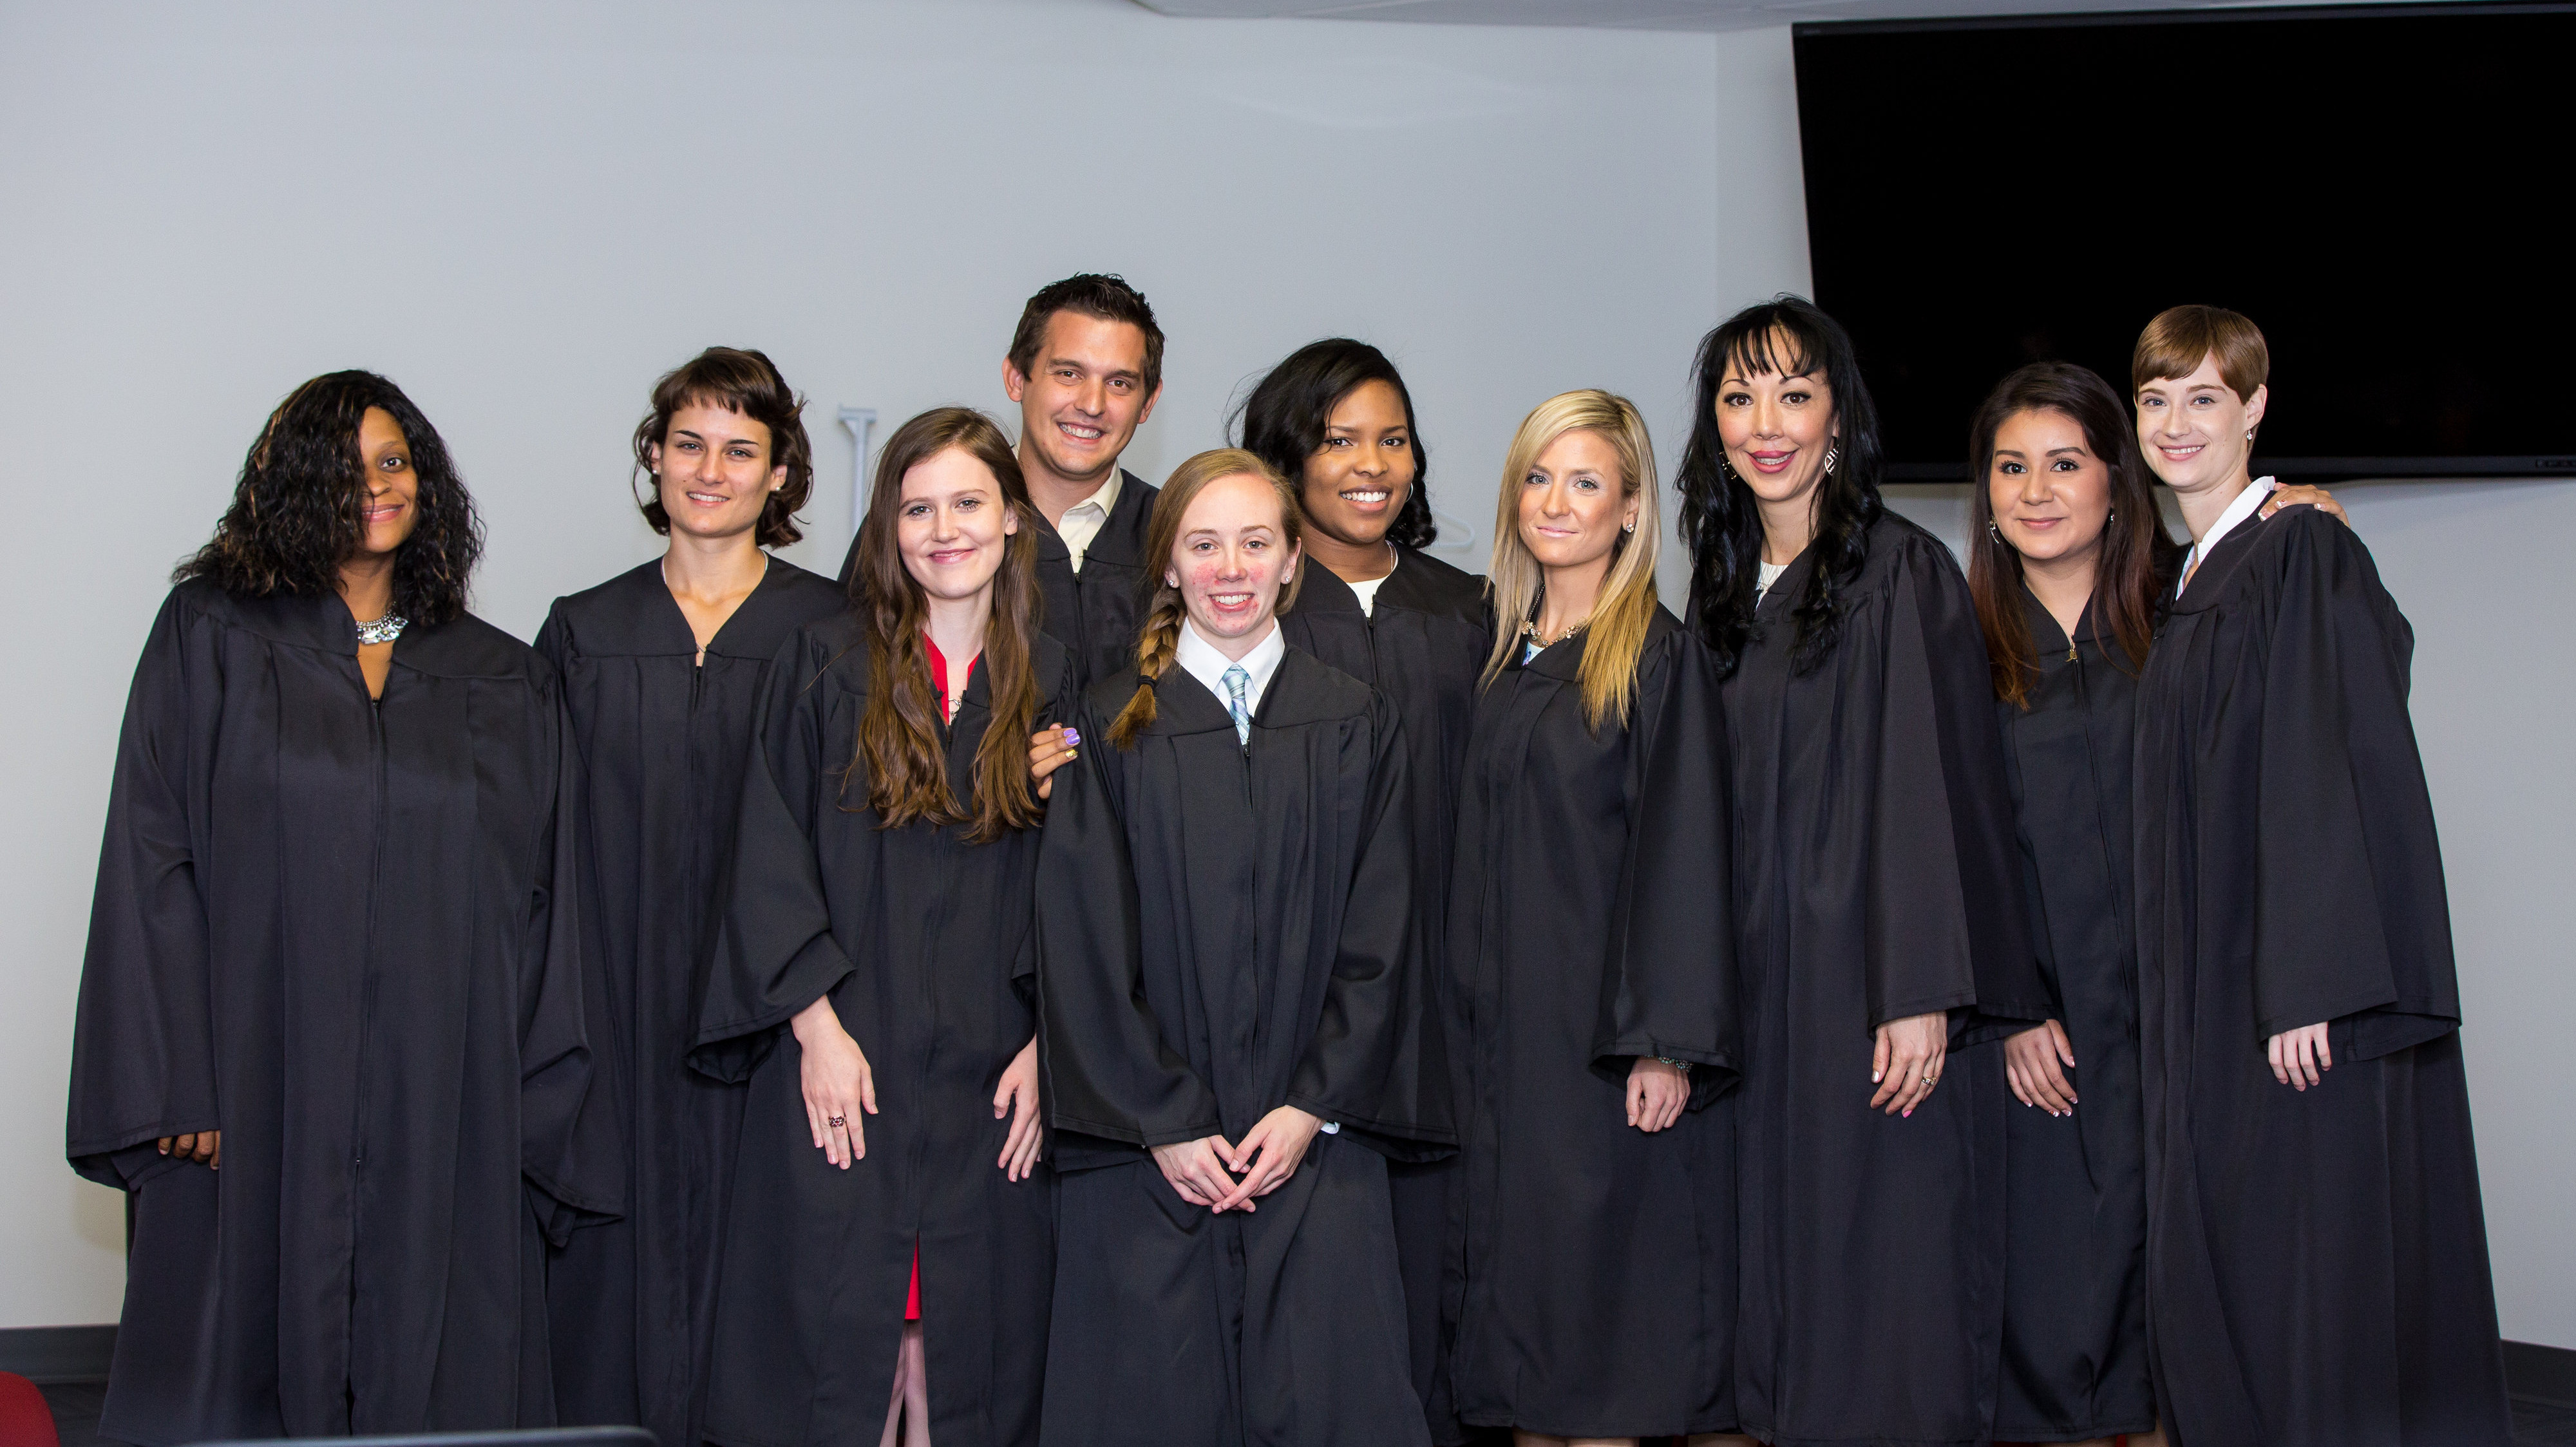 benedictine-university-at-mesa-awards-degrees-to-first-graduating-class